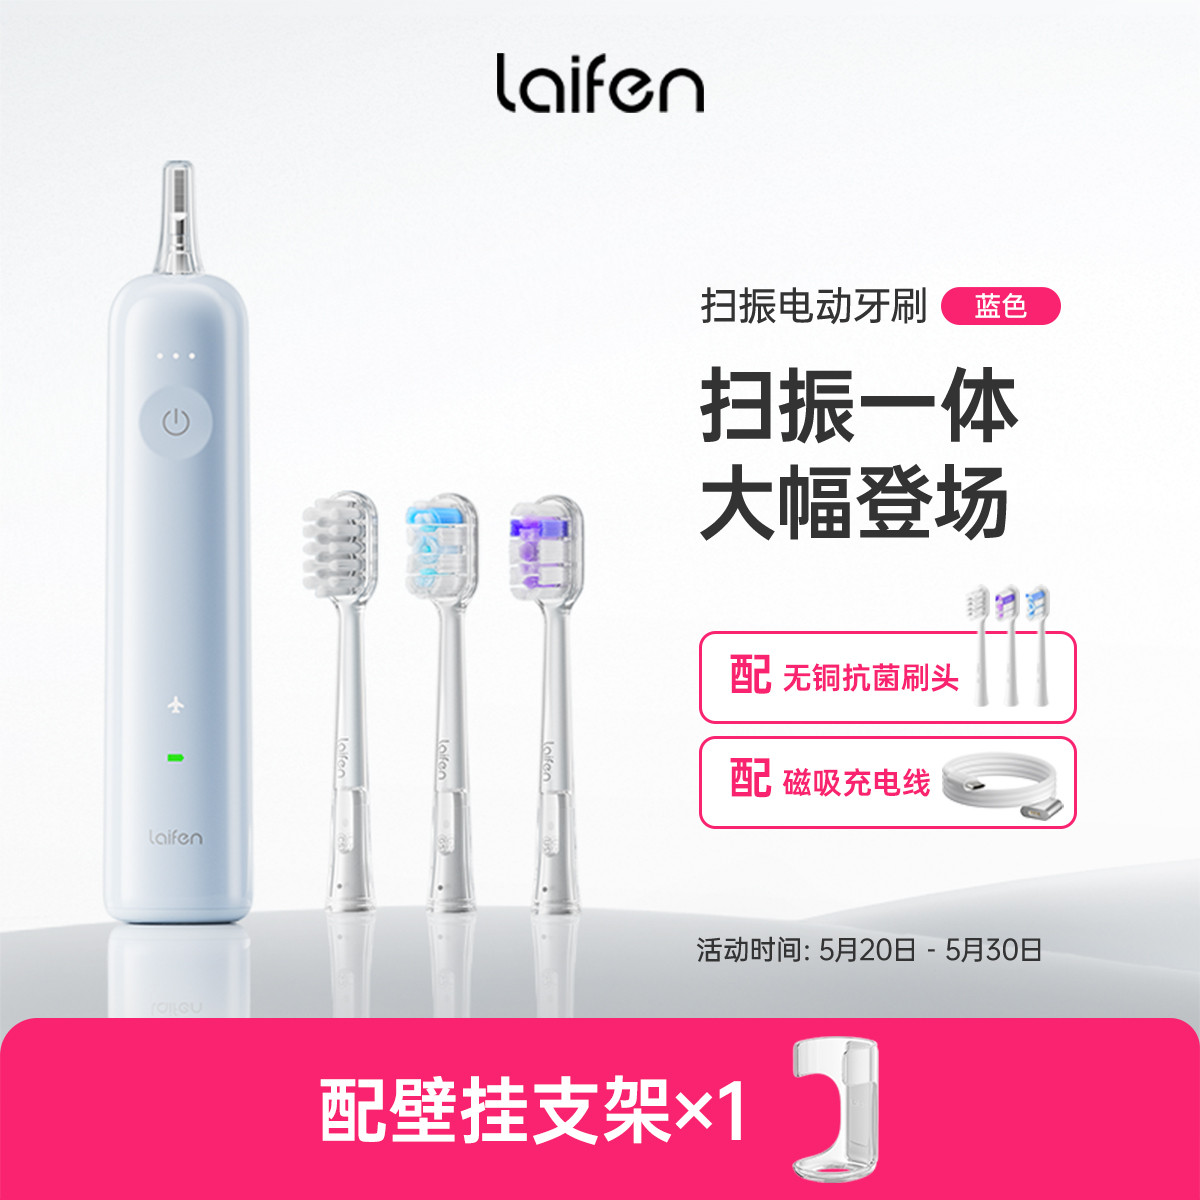 laifen 徕芬 新一代扫振电动牙刷便携高效清洁送男/女士